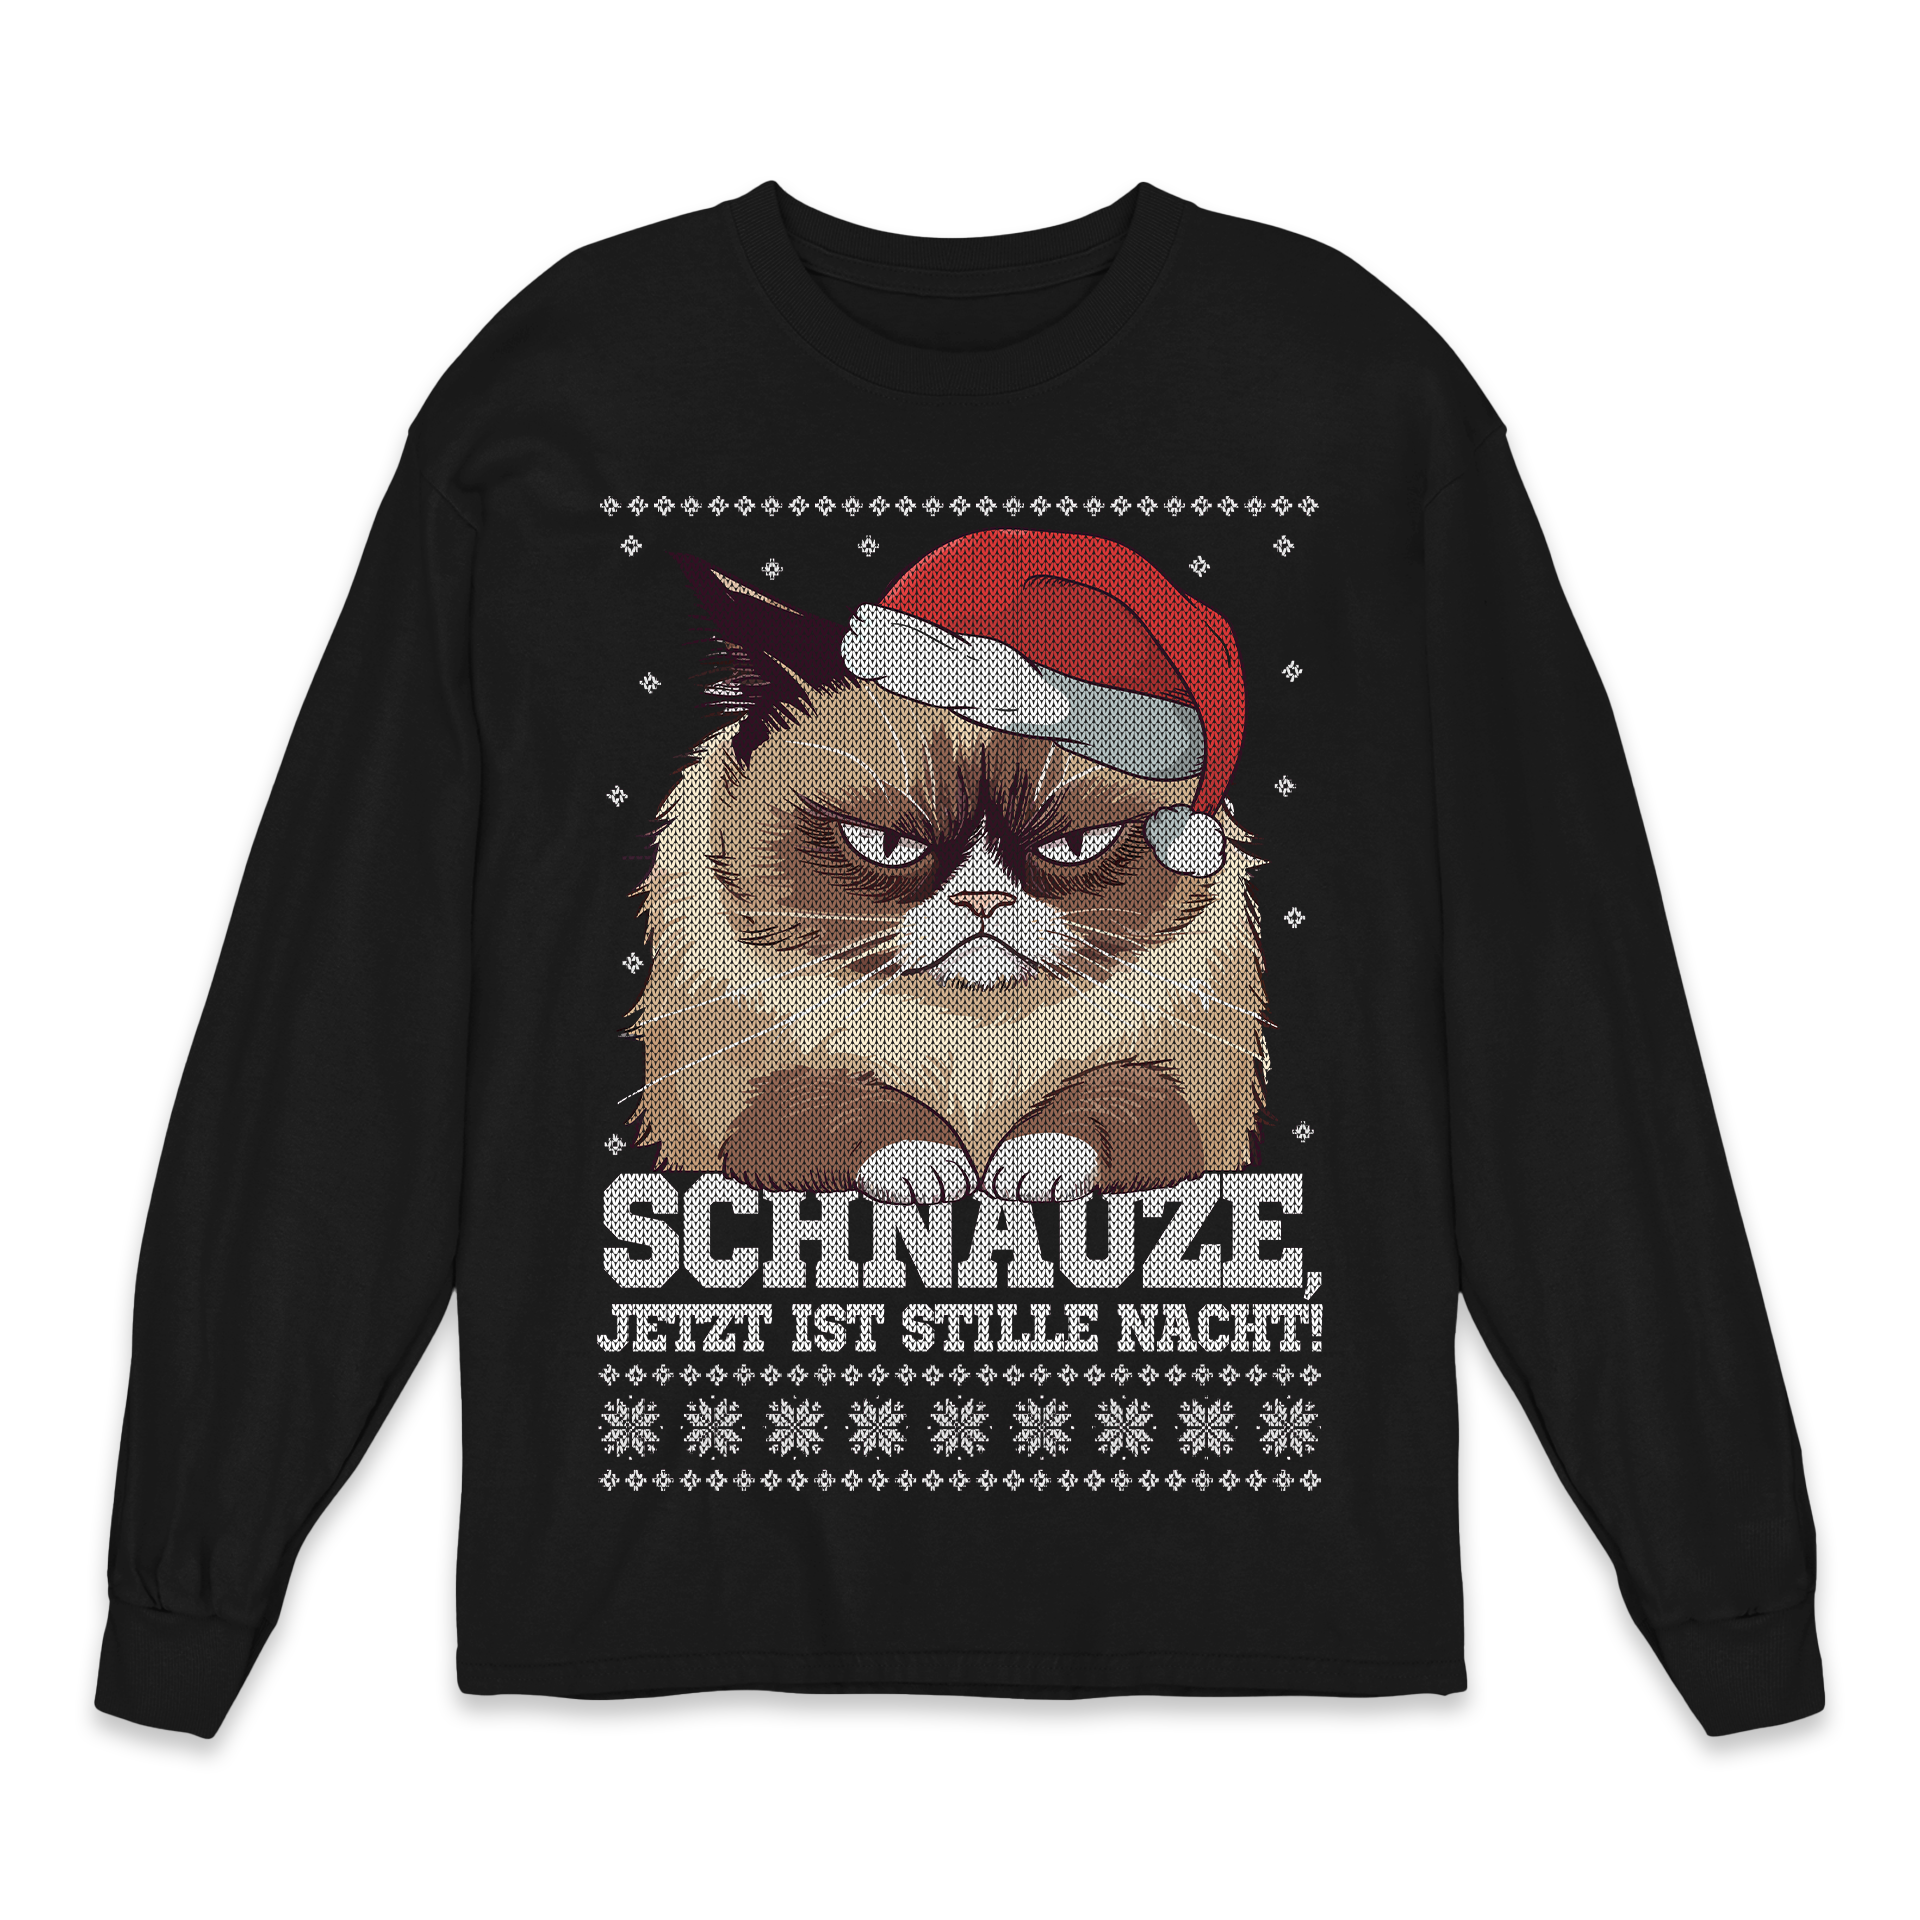 Stille Nacht! - Christmas Sweater